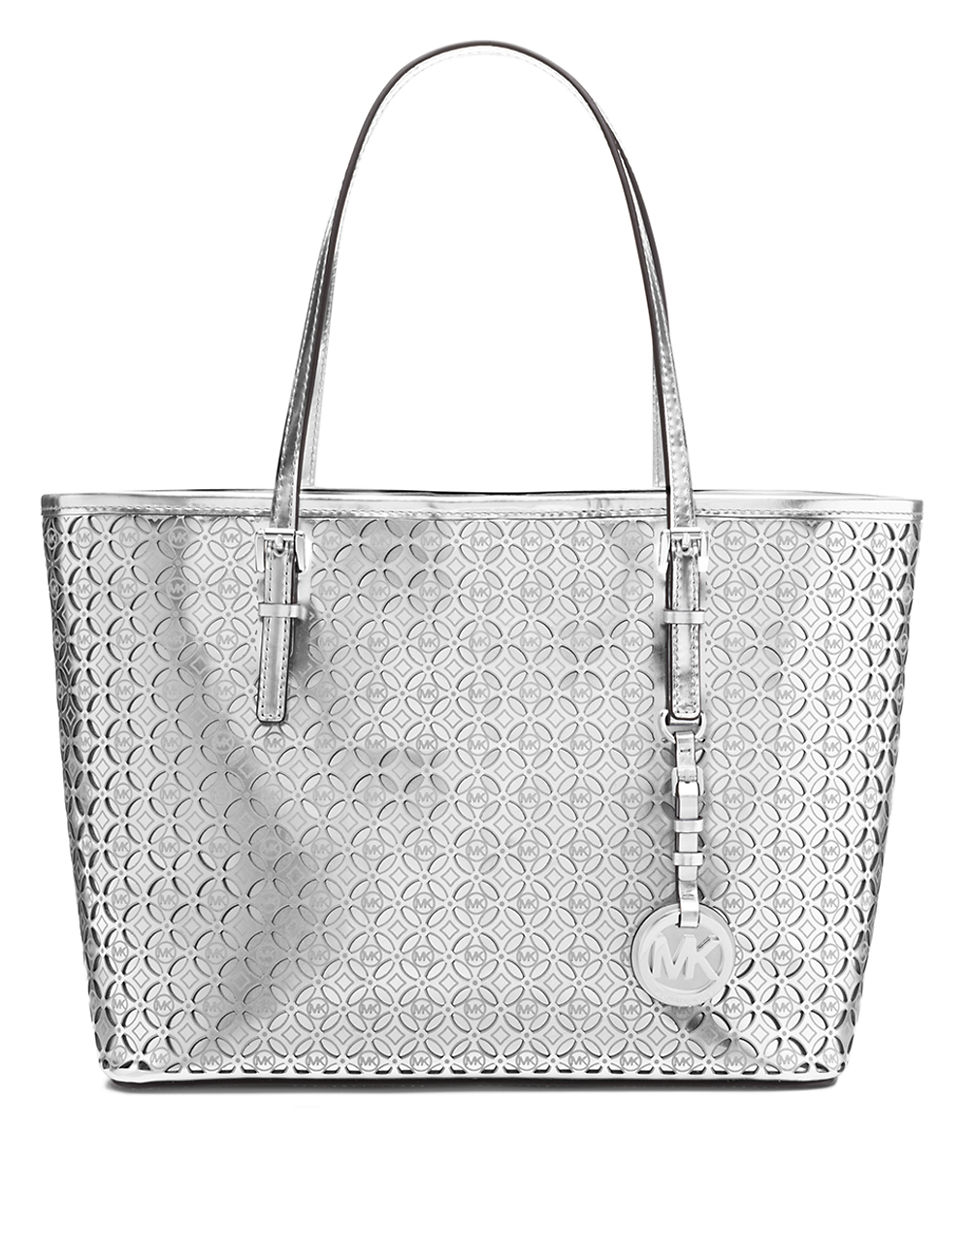 Michael Kors Jet Set Item Large Pocket Multifunciton Tote Bag Purse Handbag  : Amazon.in: Shoes & Handbags